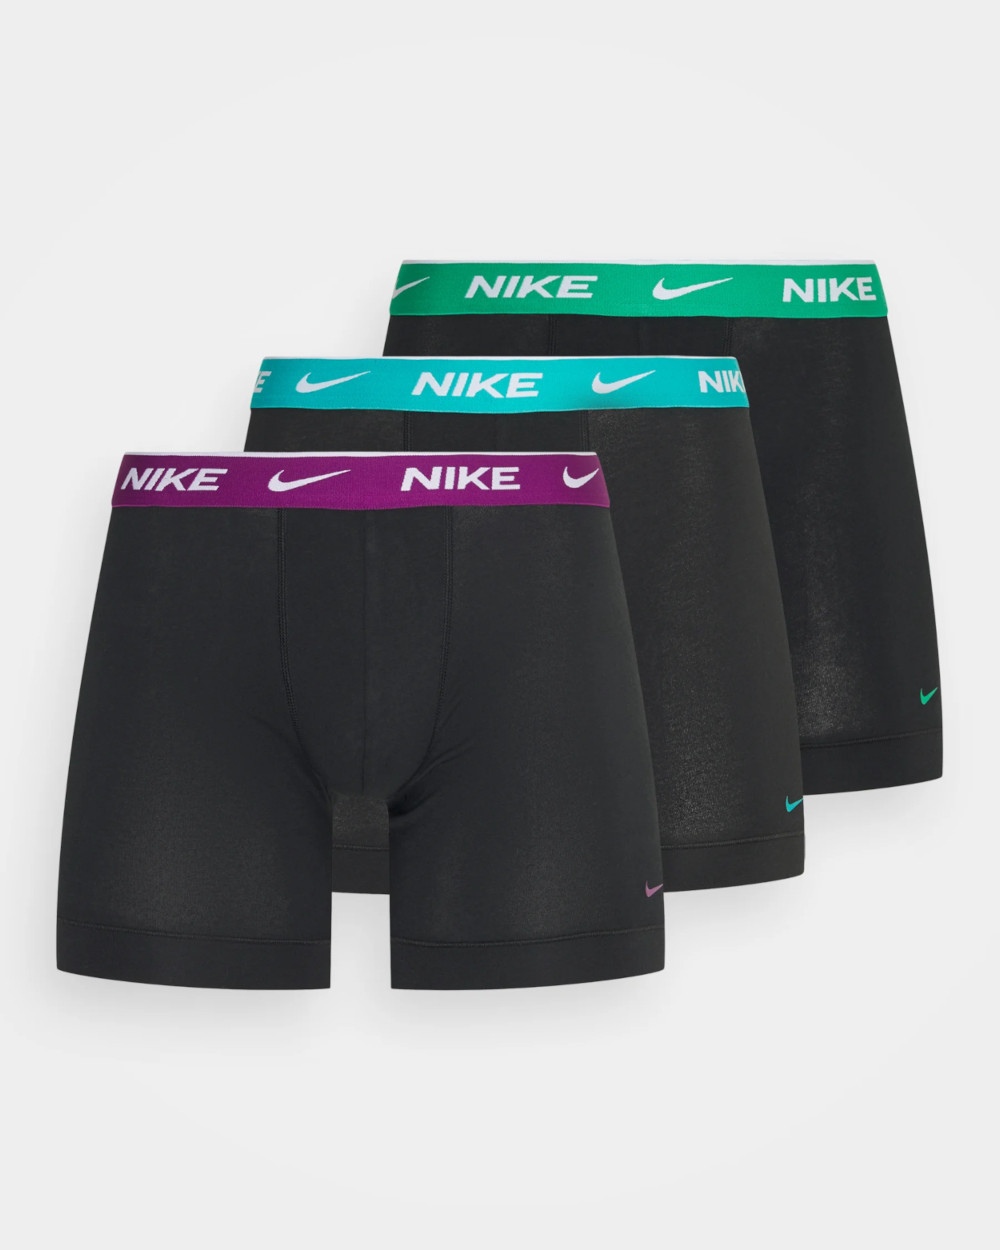  Intimo boxer culotte slip mutande UOMO Nike Underwear BRIEF 3 pack Culotte